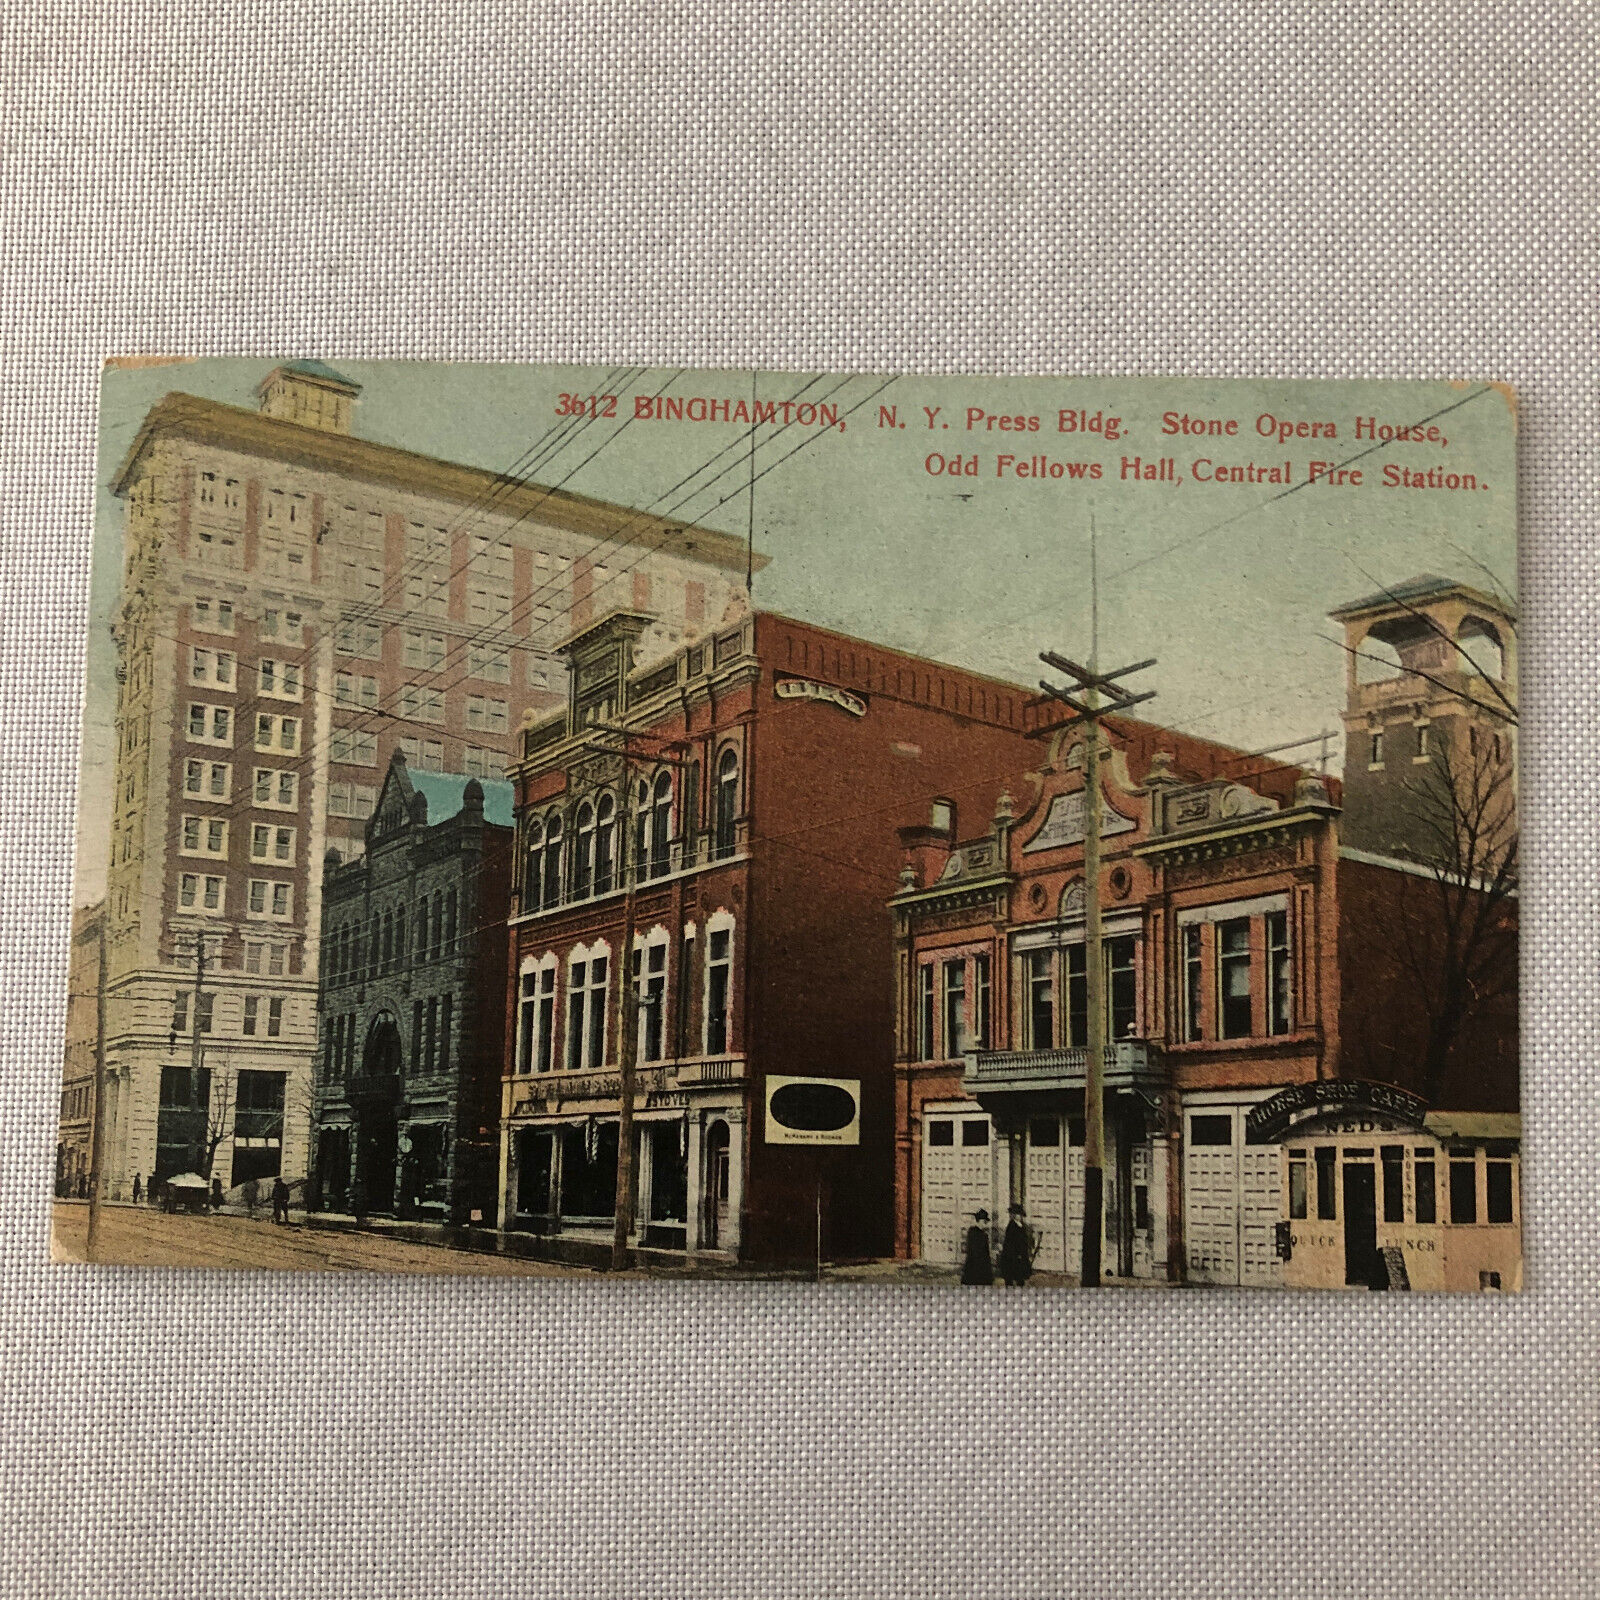 Binghampton New York NY Odd Fellows Hall FIre Station Opera House Postcard 1909